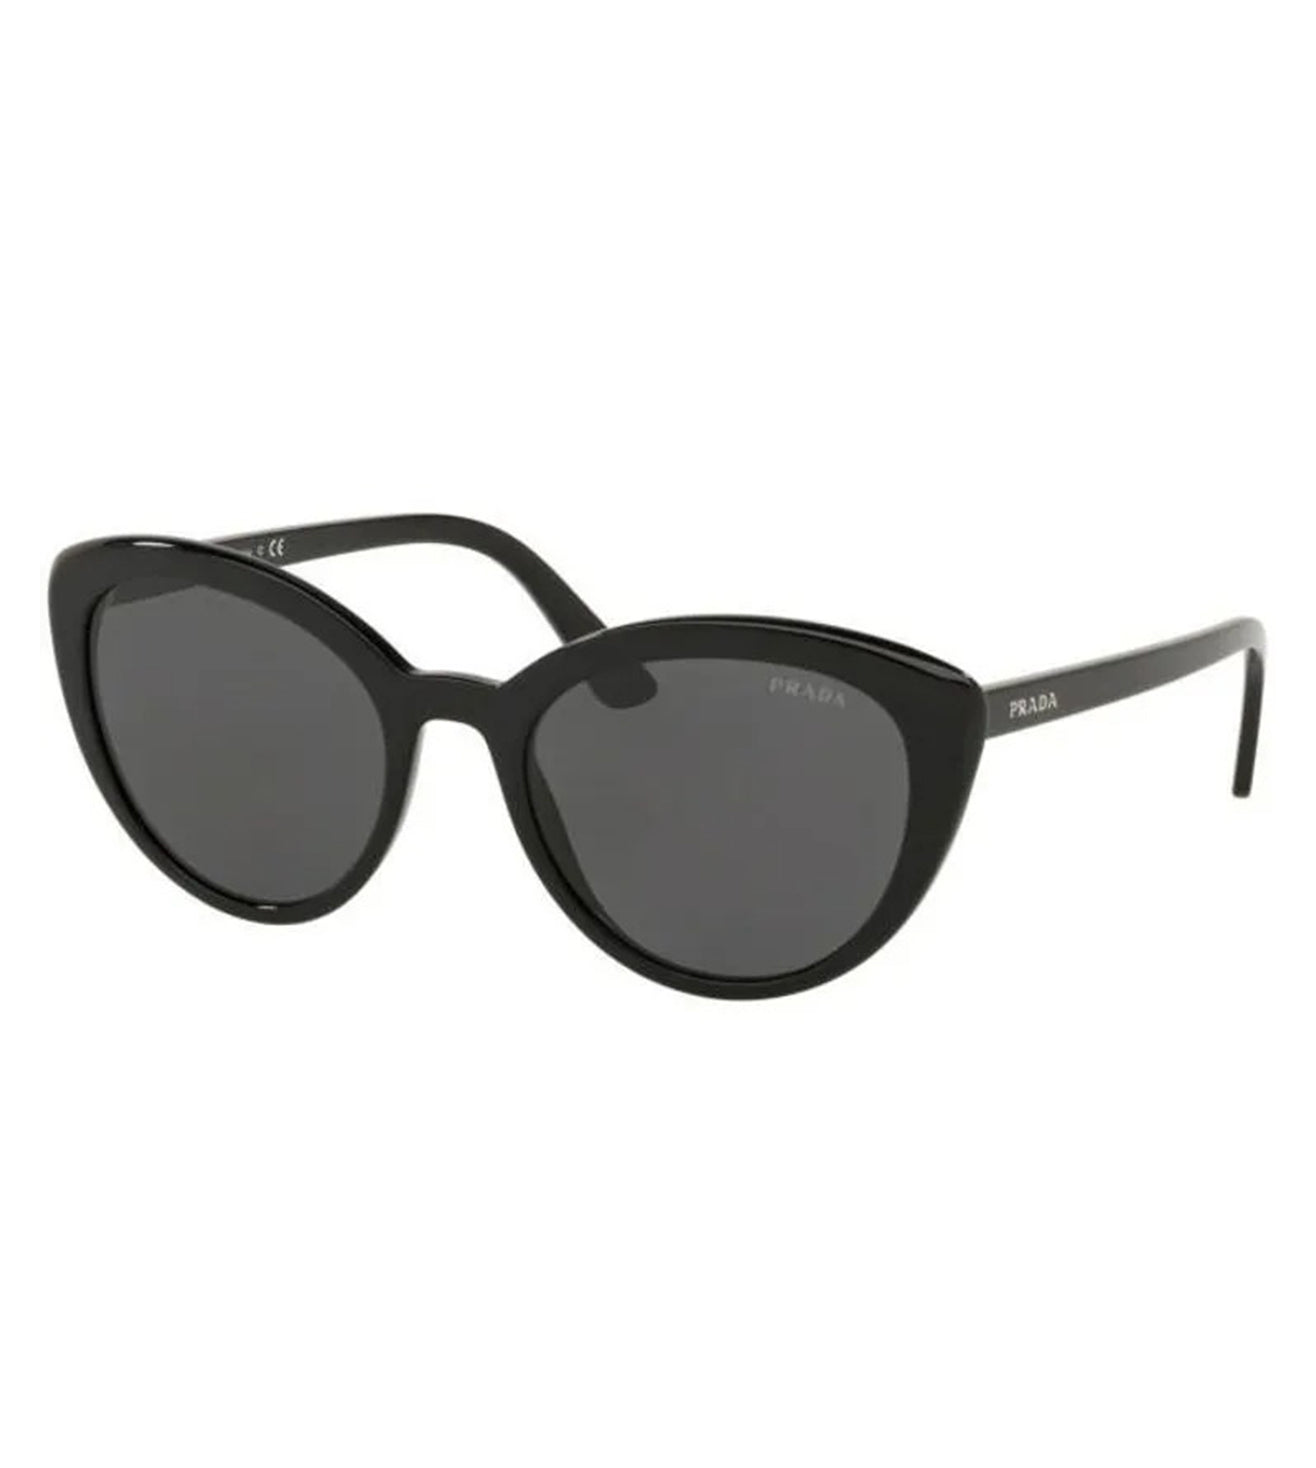 Prada Women's Grey Cat-eye Sunglasses